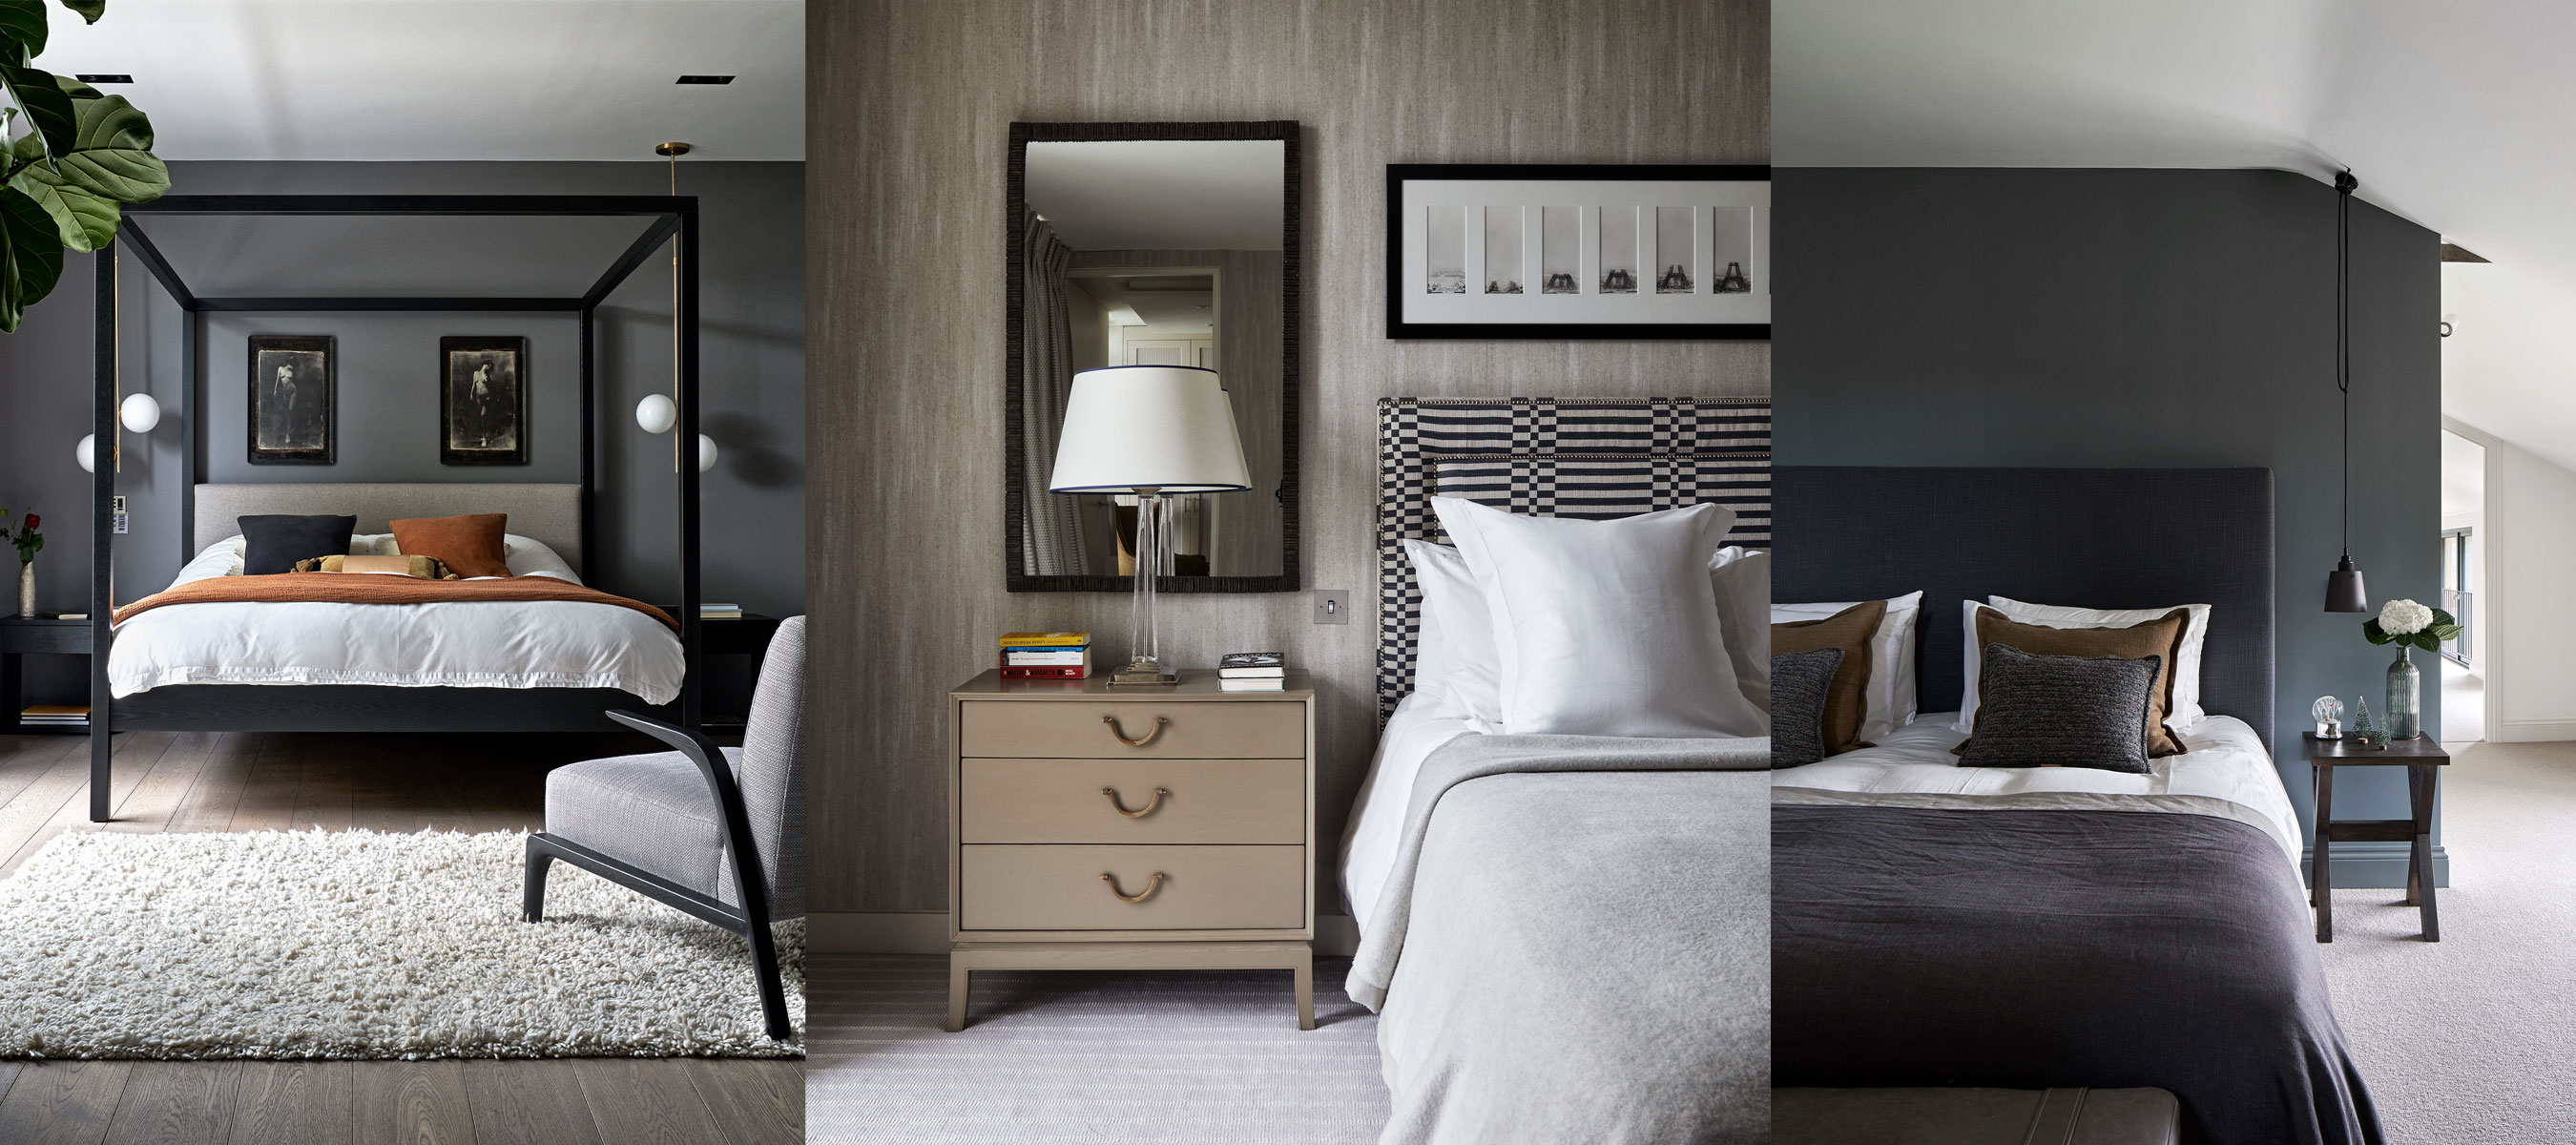 Black and white bedroom ideas: 10 monochrome decor tips |